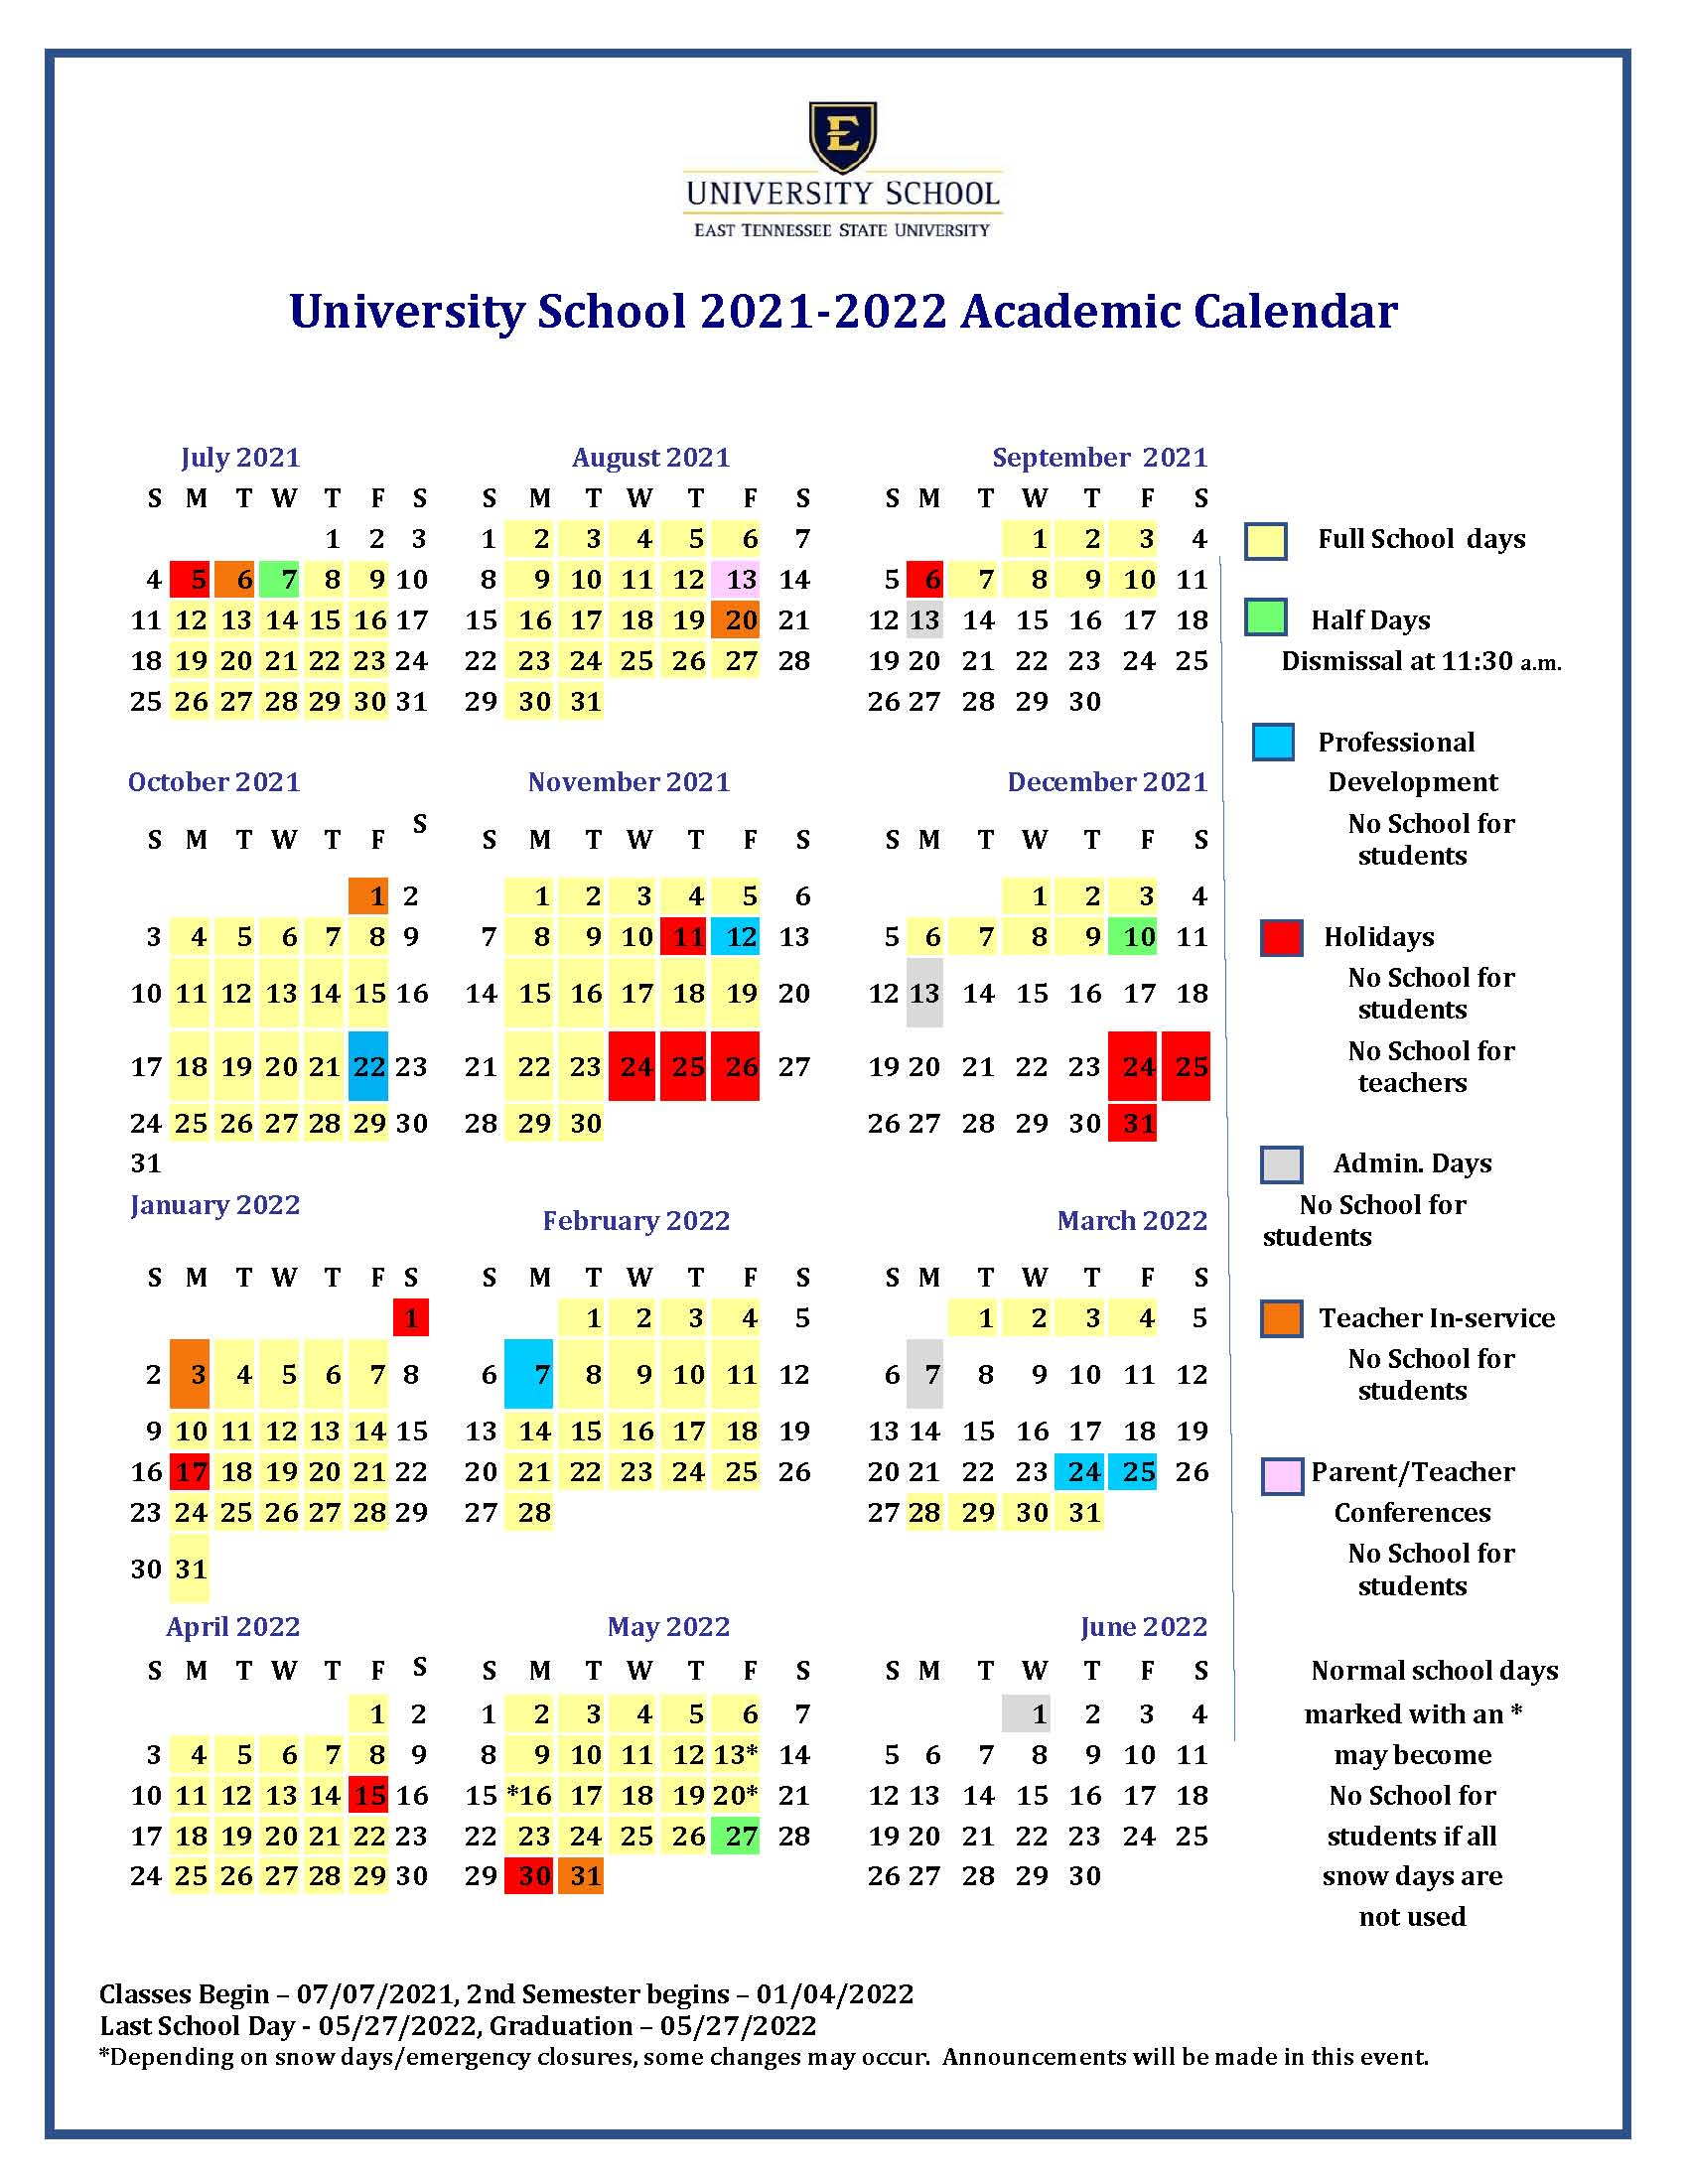 bloomsburg-university-academic-calendar-grades-due-universitycalendars